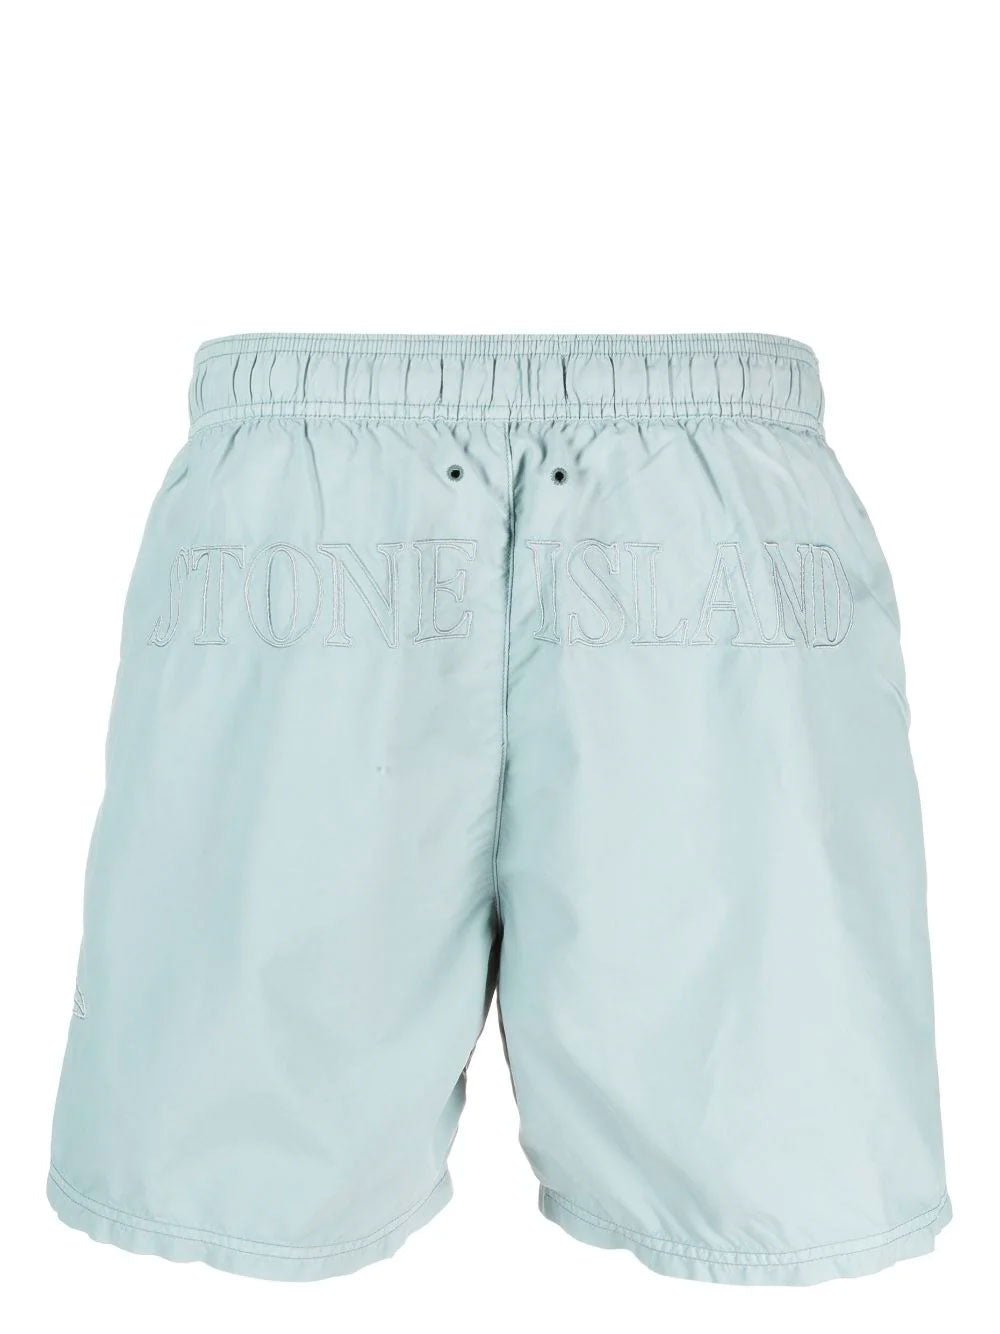 Stone IslandStar swim shorts at Fashion Clinic